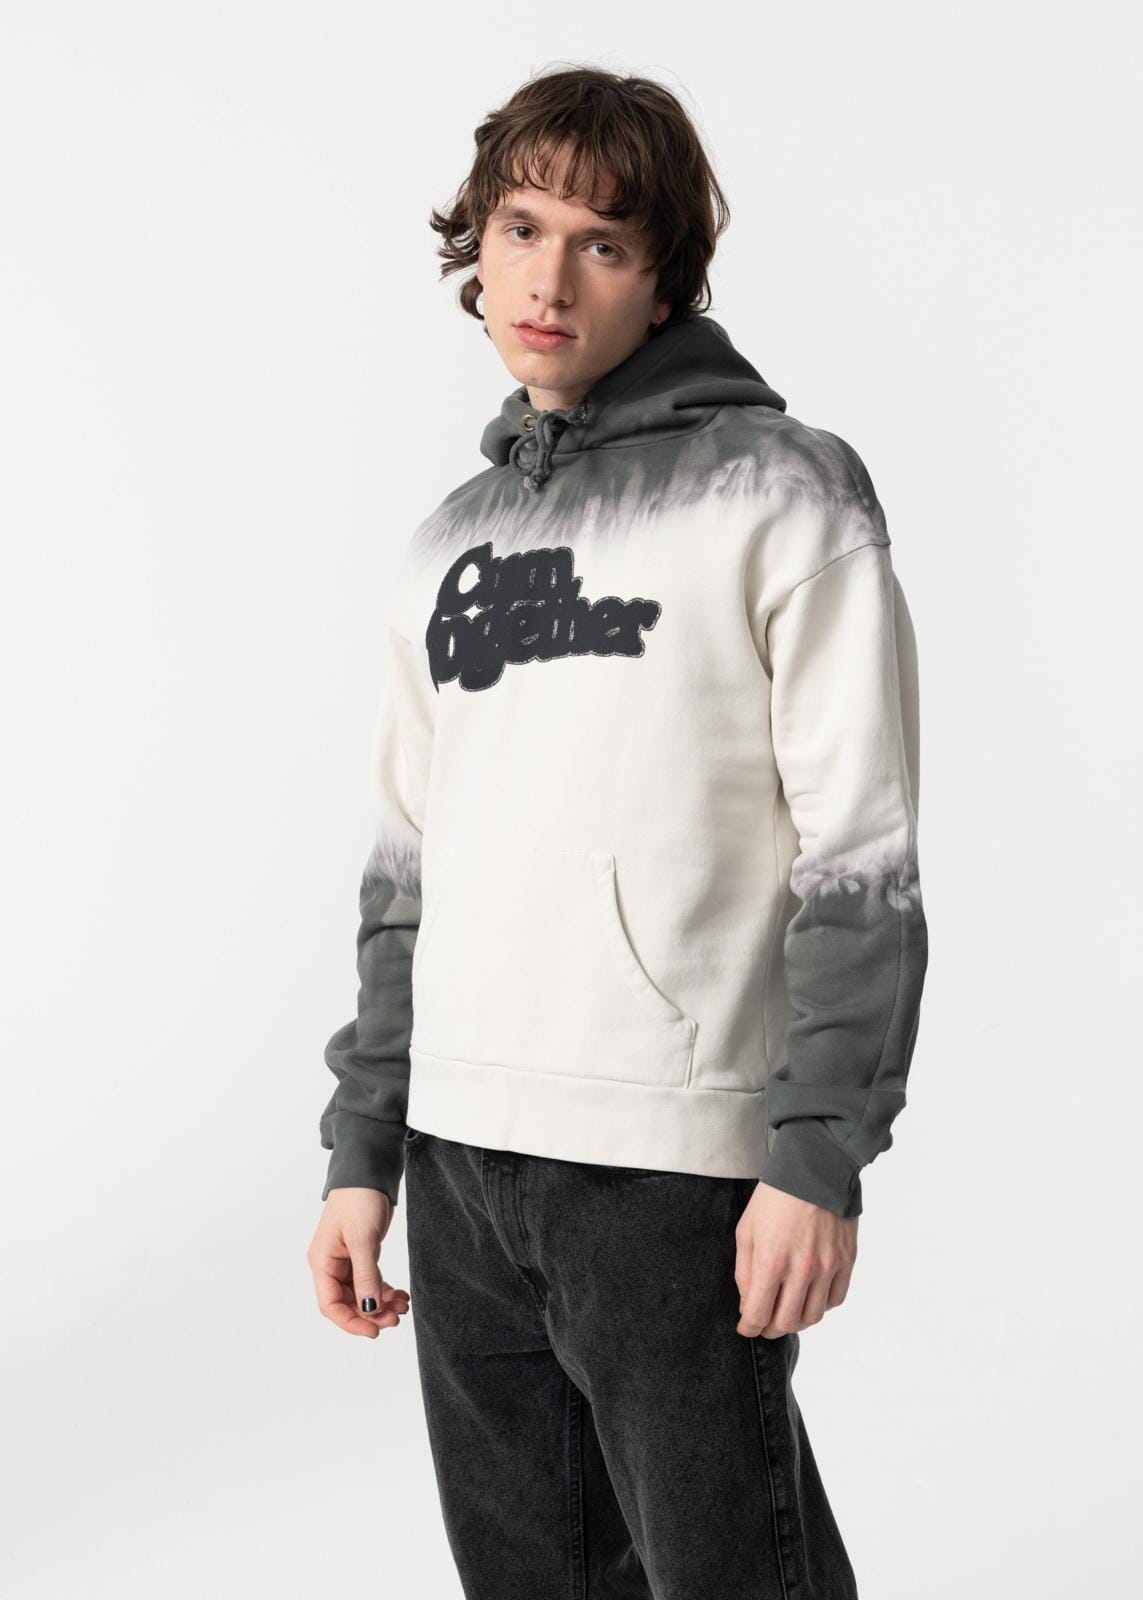 Eventual cum rag shirt, hoodie, sweatshirt and tank top